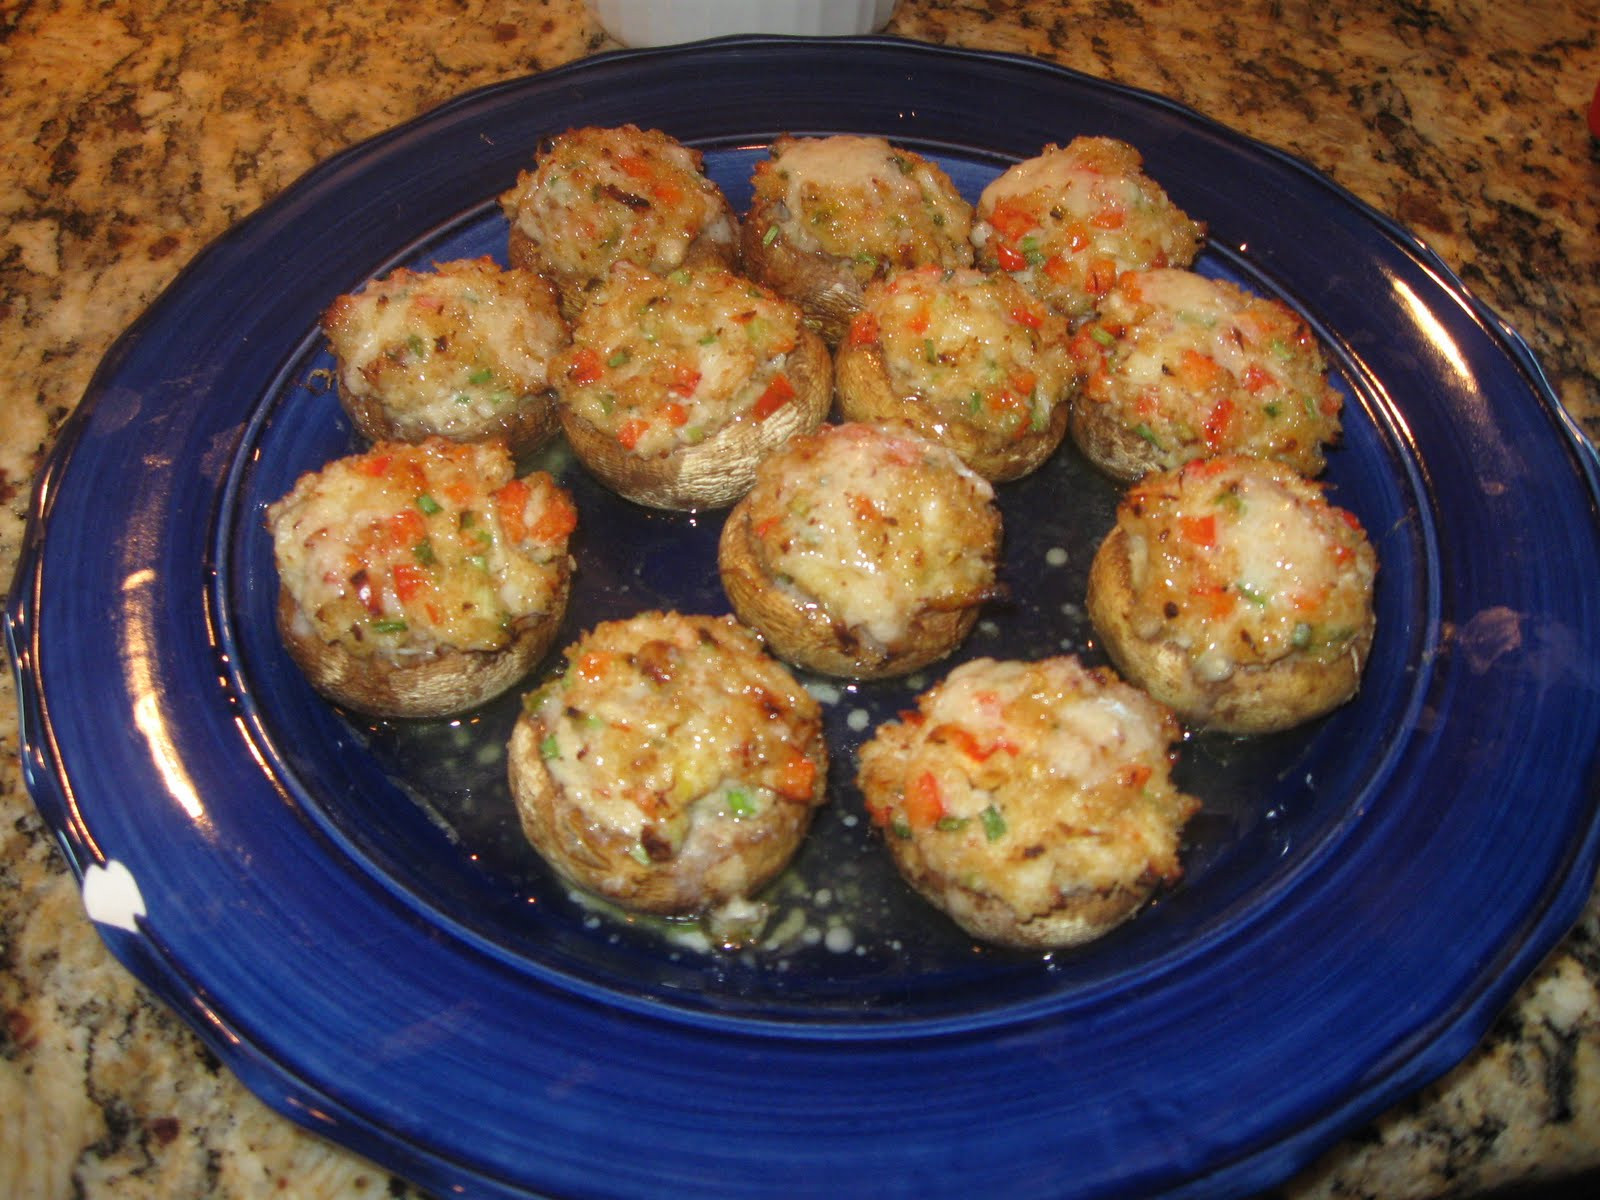 Stuffed Mushroom Recipes With Crab Meat
 My Songs of Joy Family Food & Wine Crab Stuffed Mushrooms